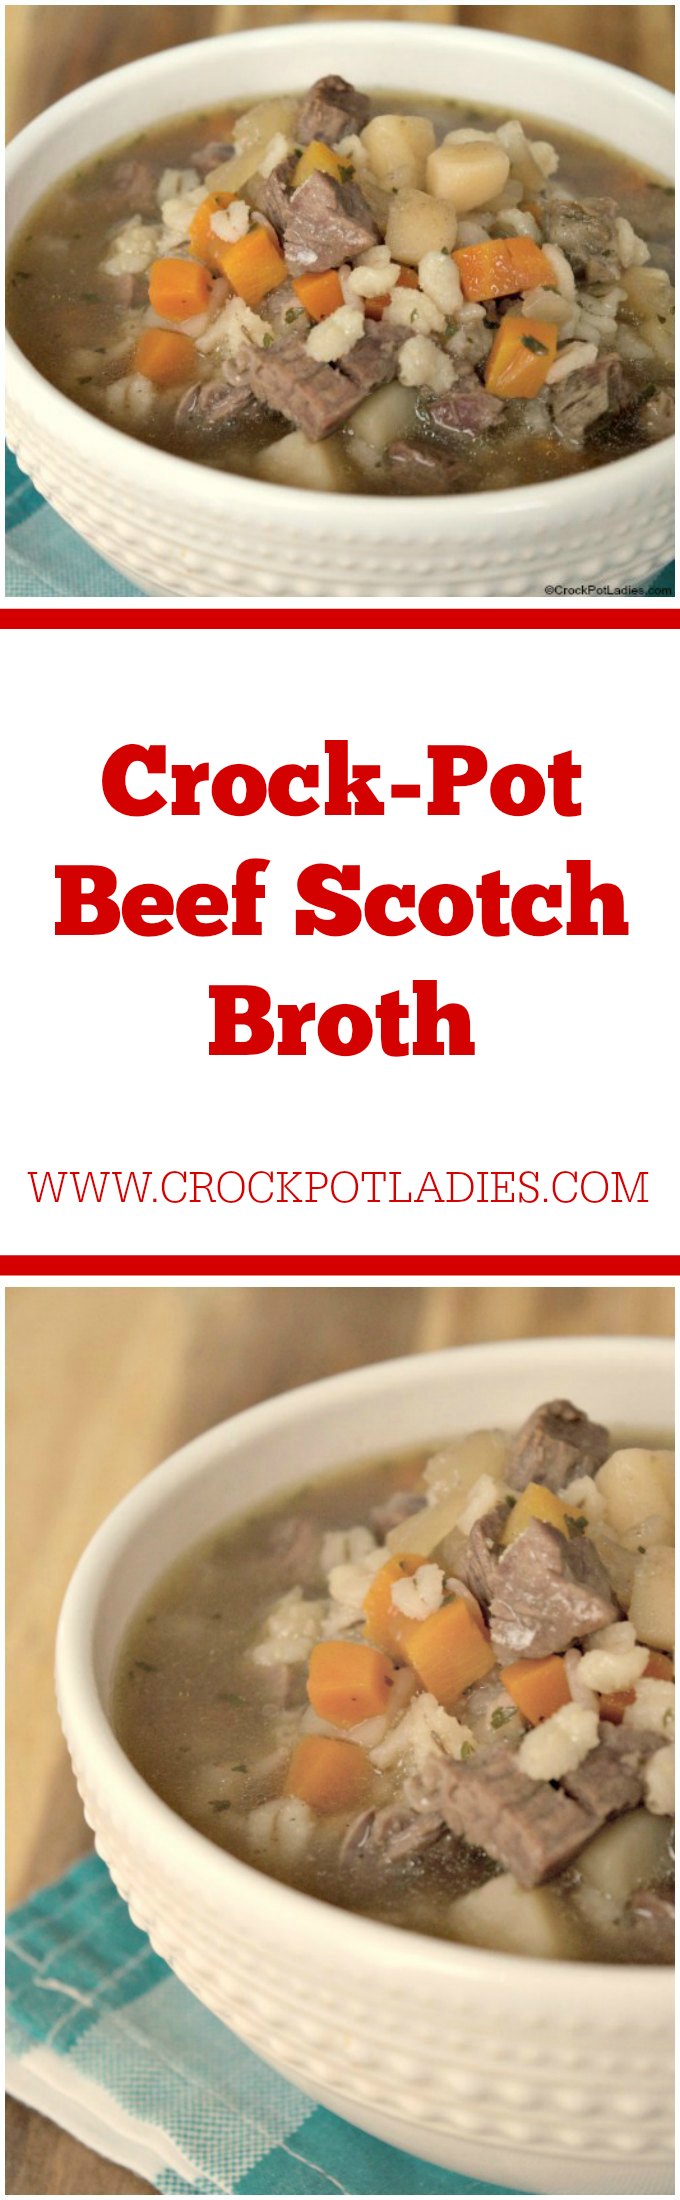 Crock-Pot Beef Scotch Broth